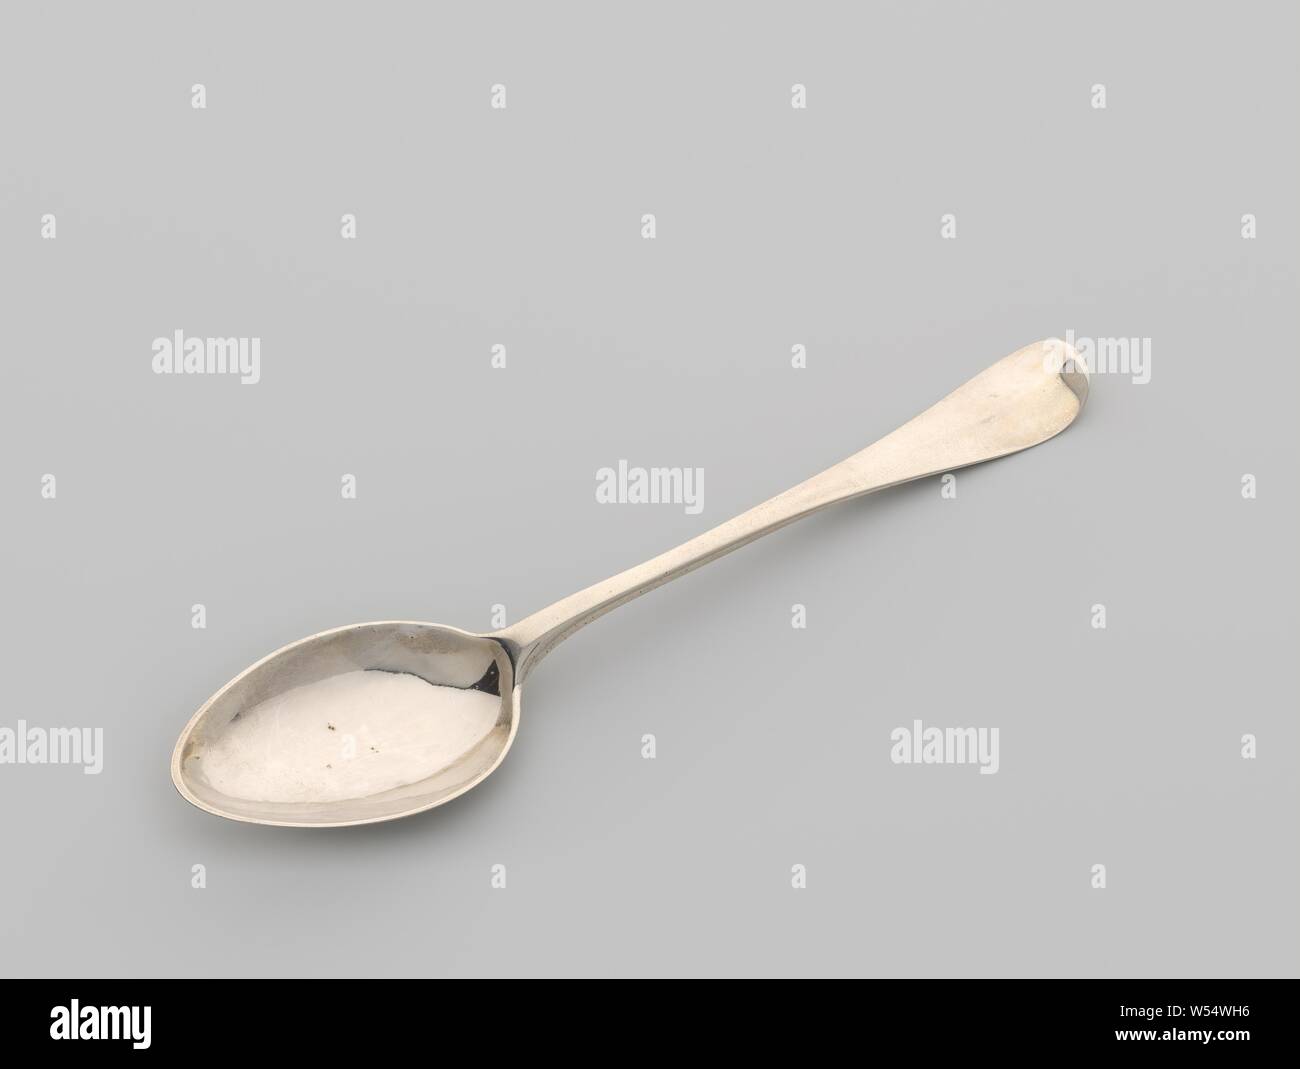 Virginia Baby Bent Spoon  Curved Handle Baby Feeding Spoon